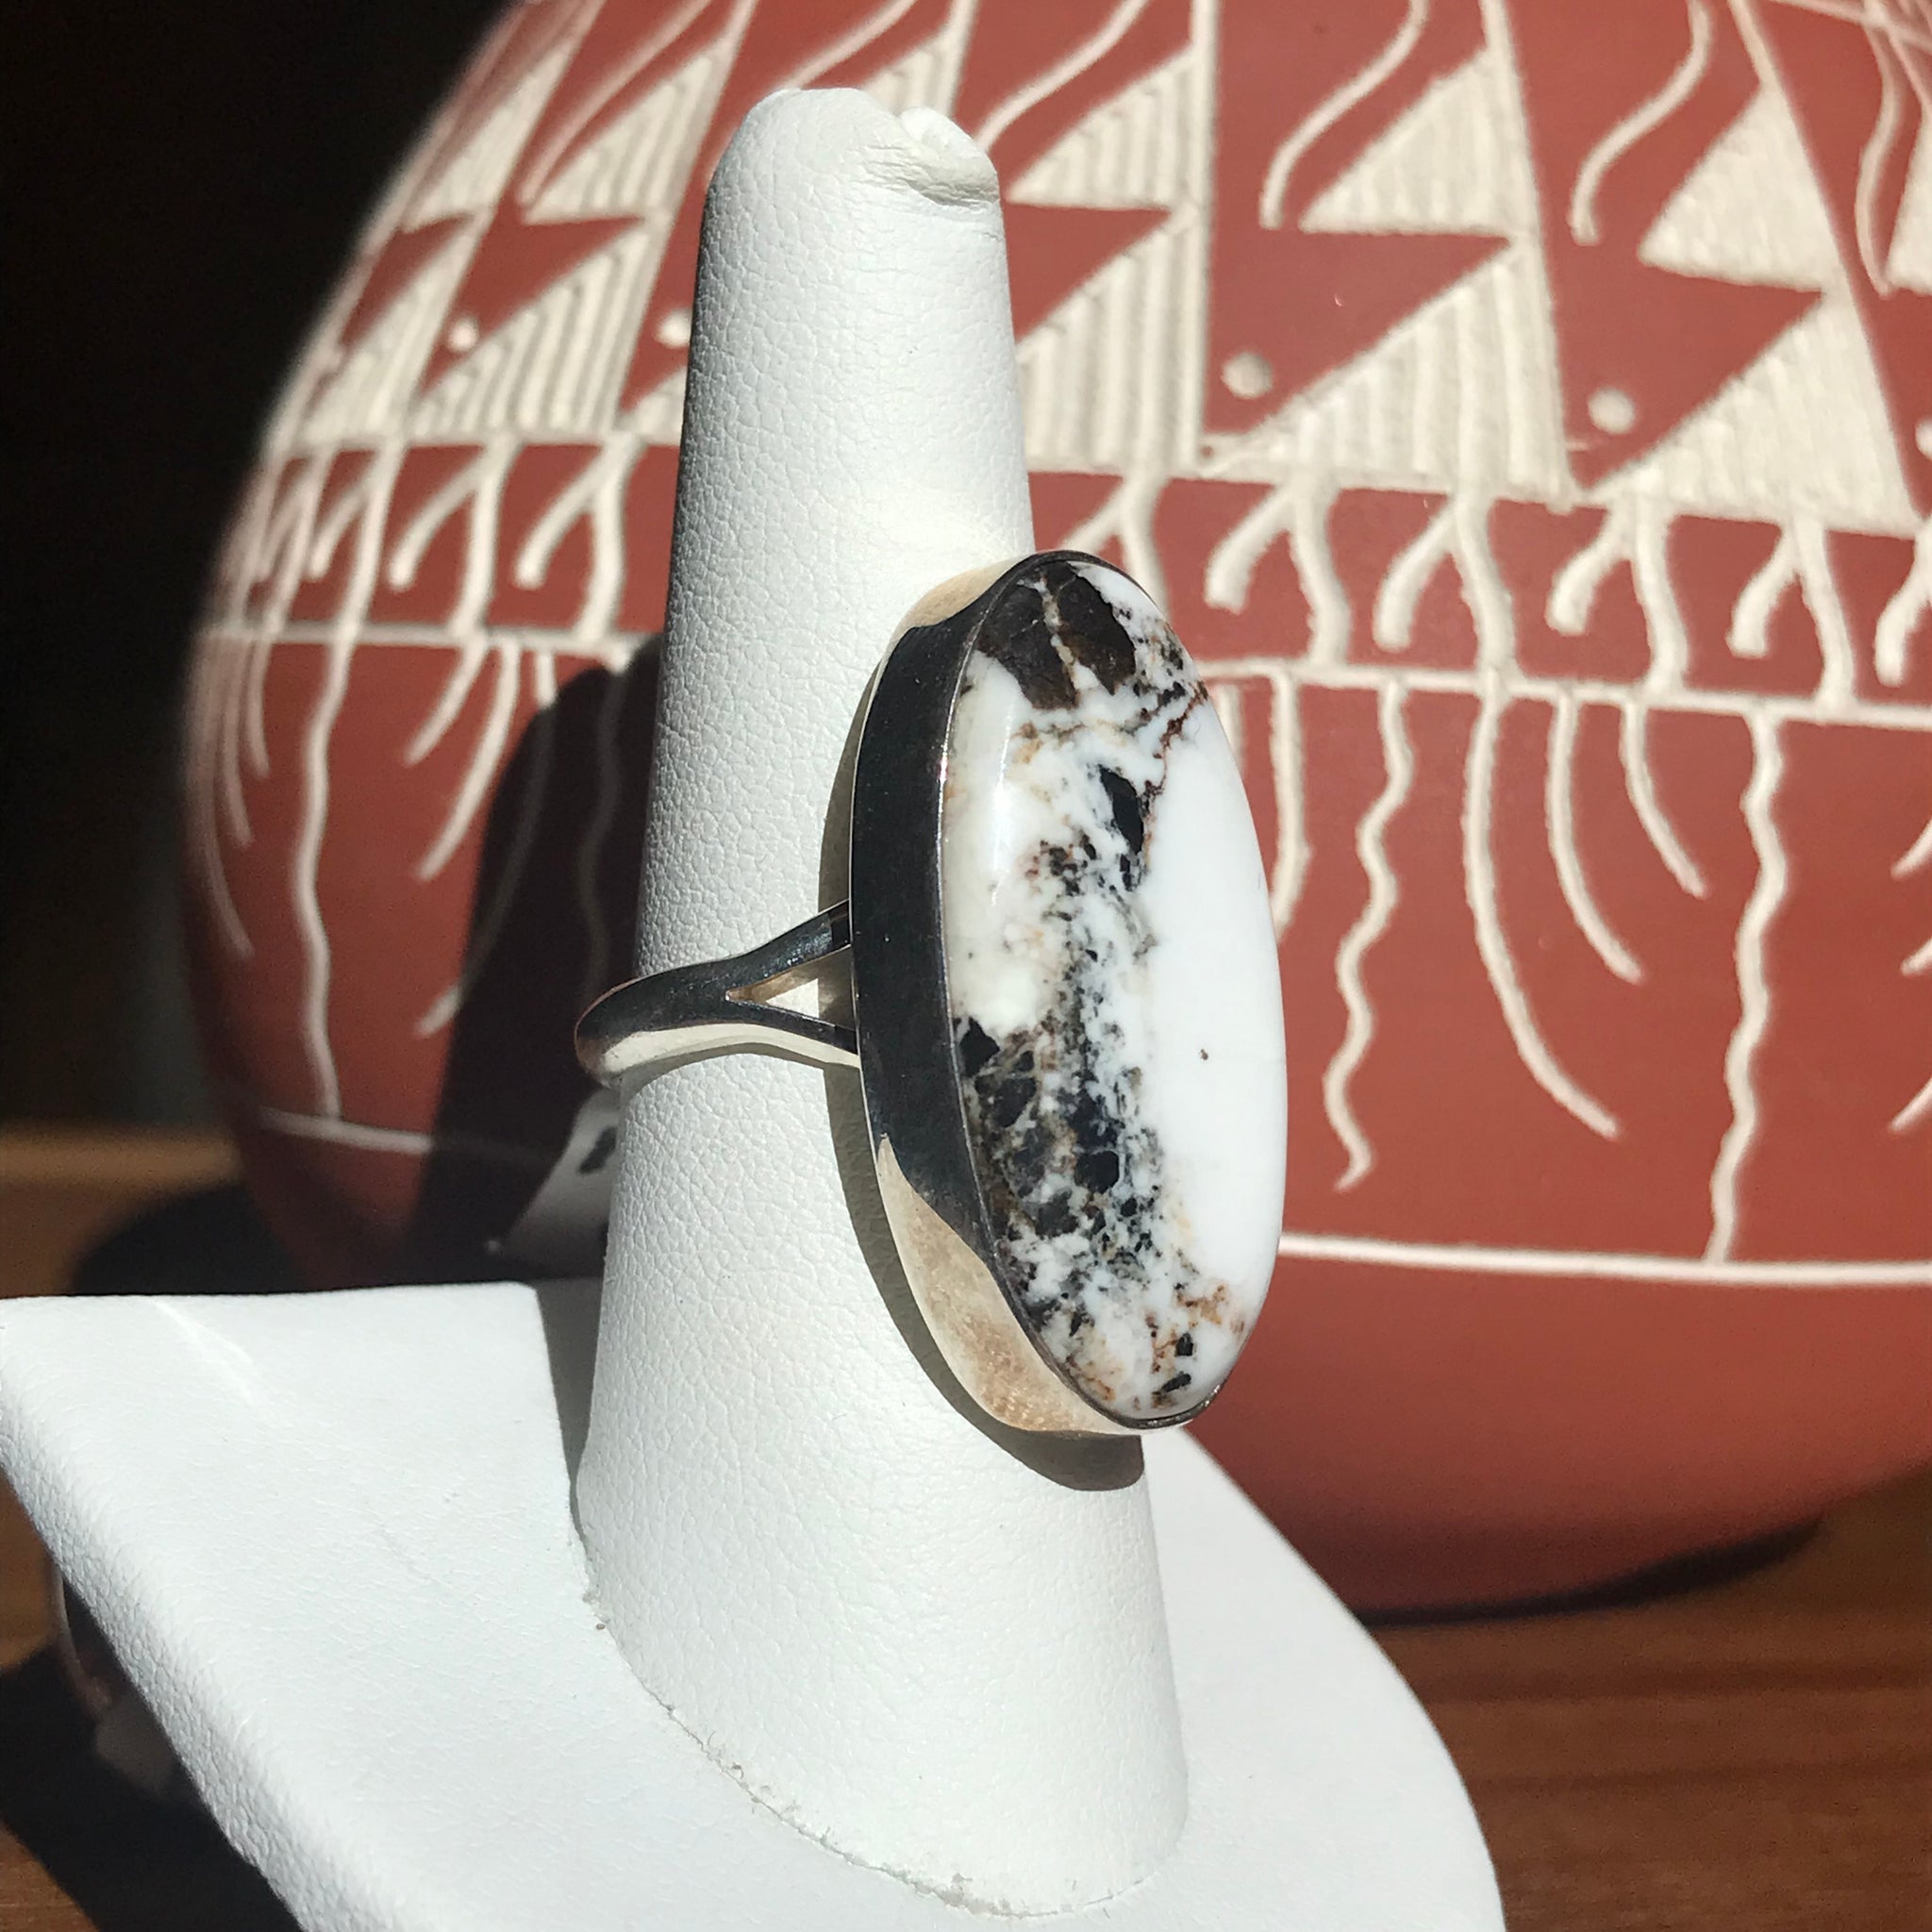 White Buffalo Ring